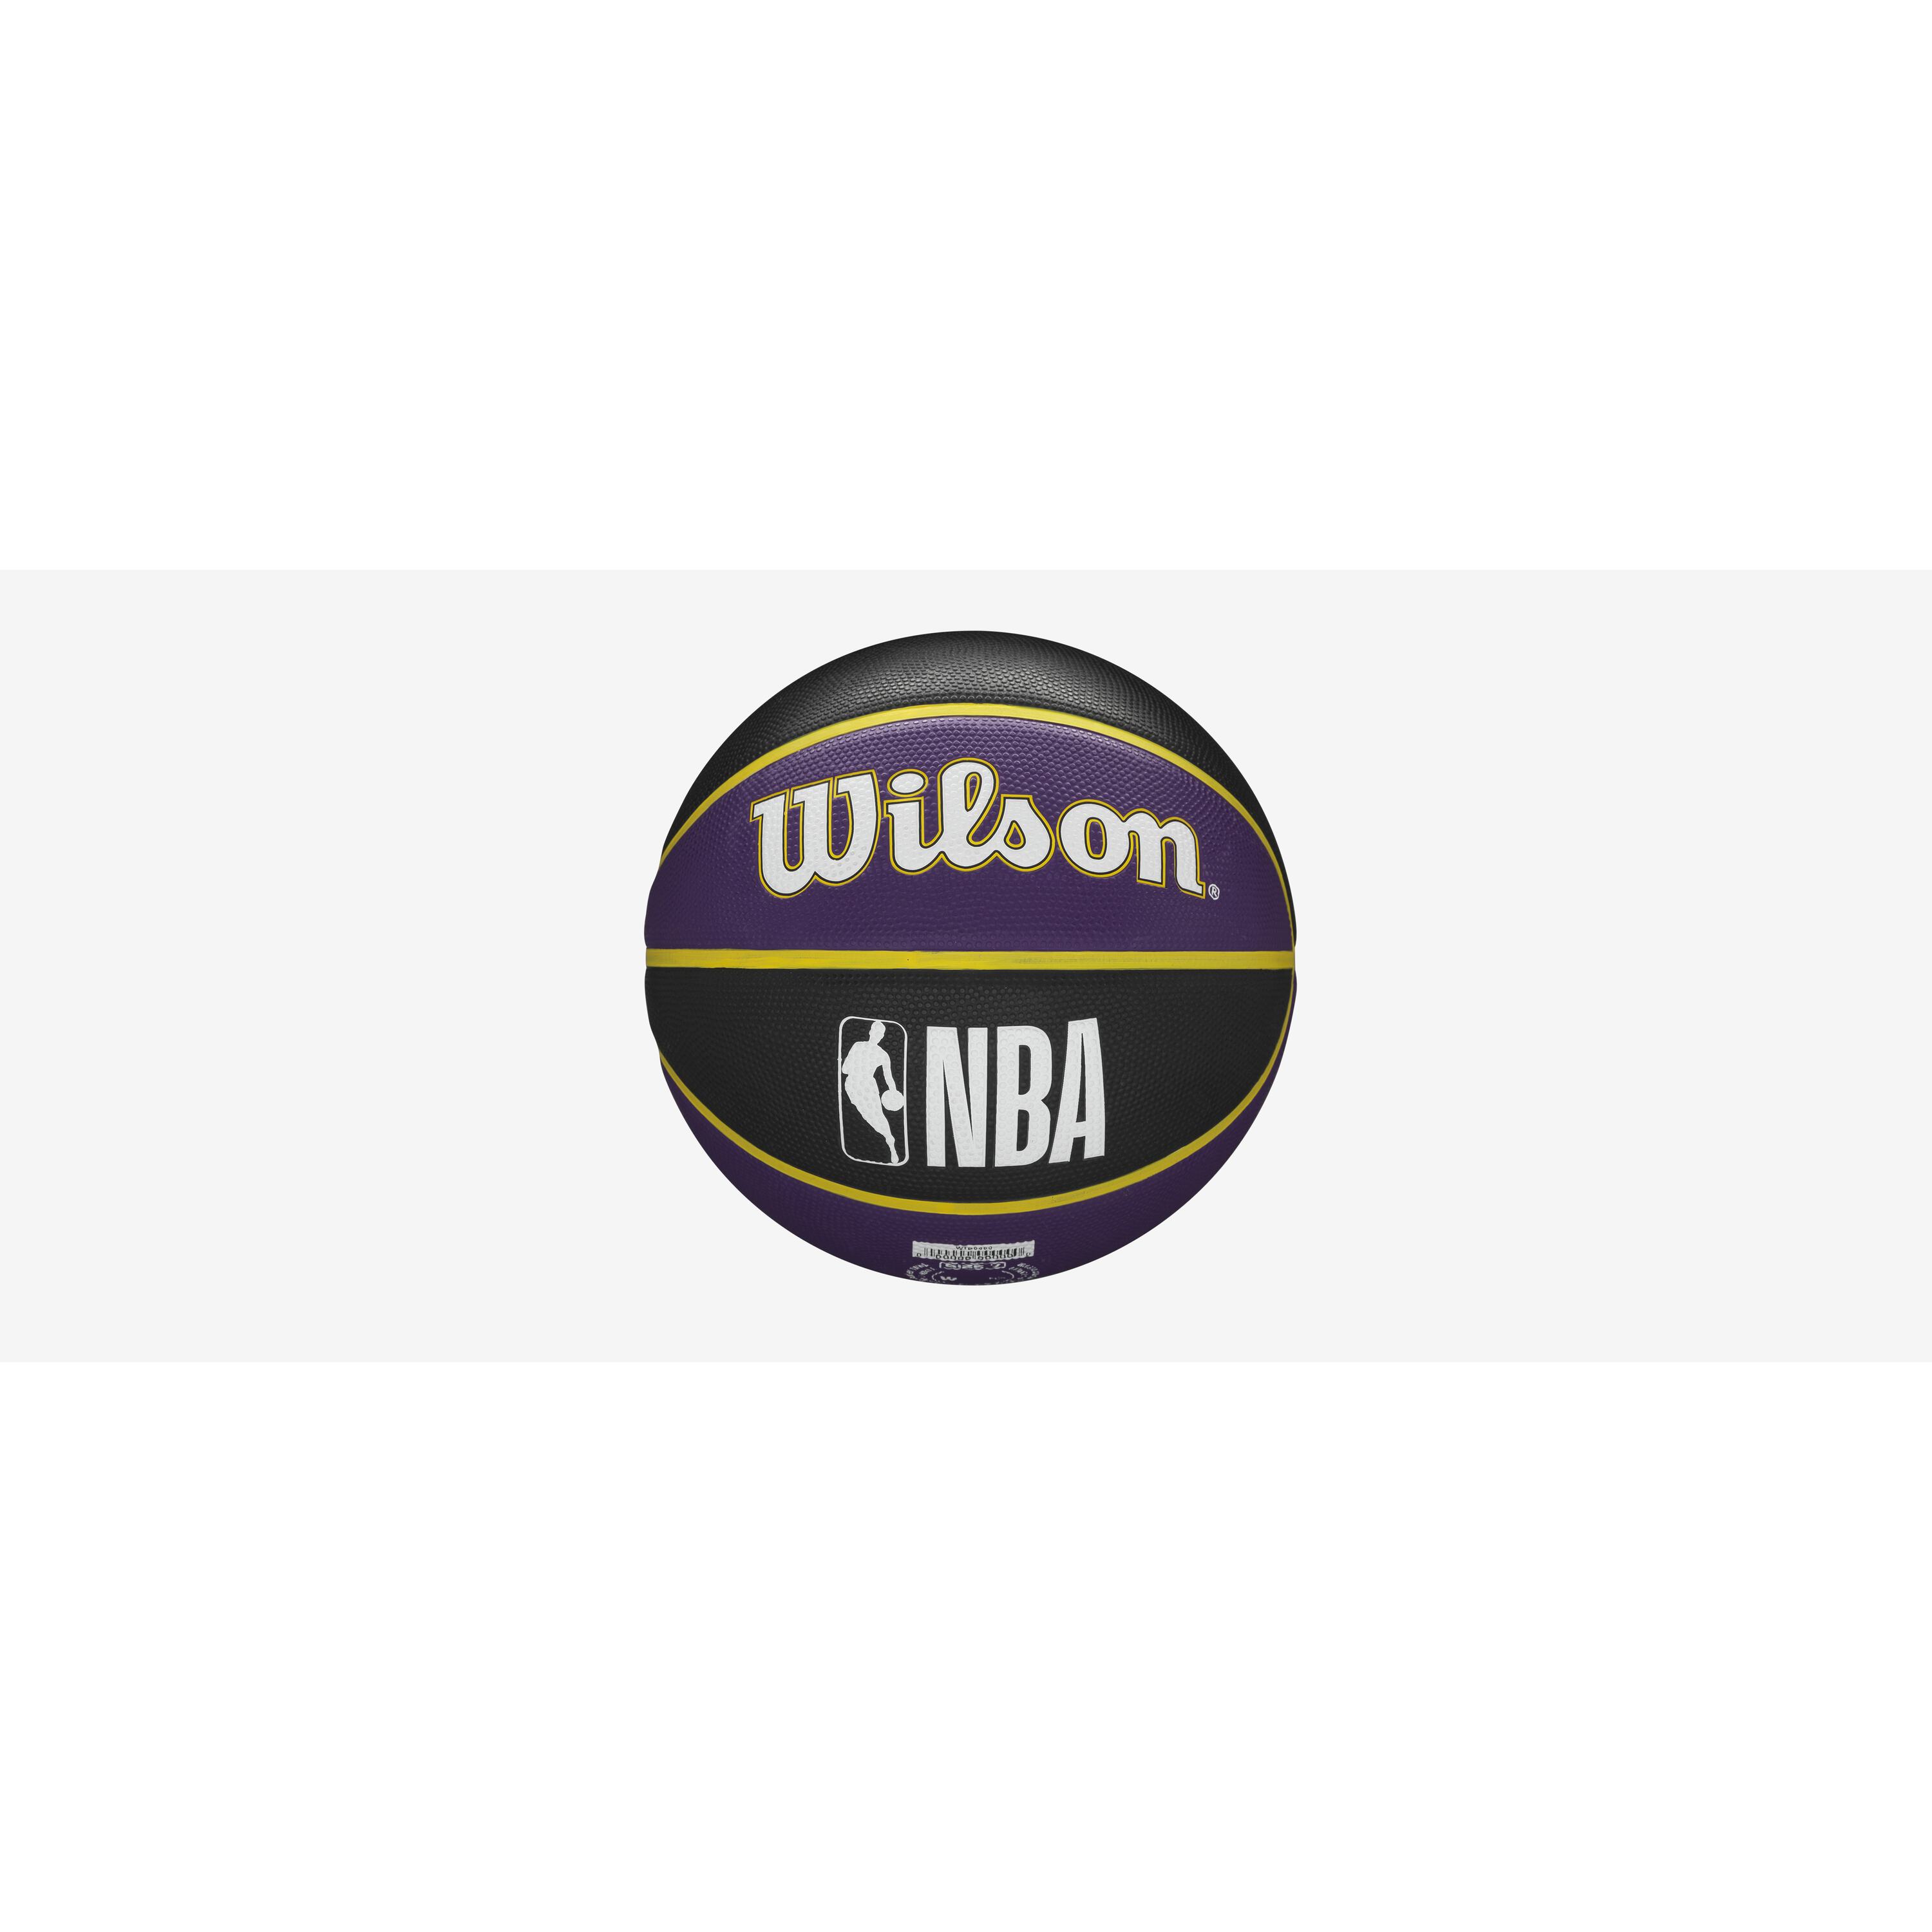 Bola De Basquetebol Wilson Nba Team Tribute - Los Angeles Lakers